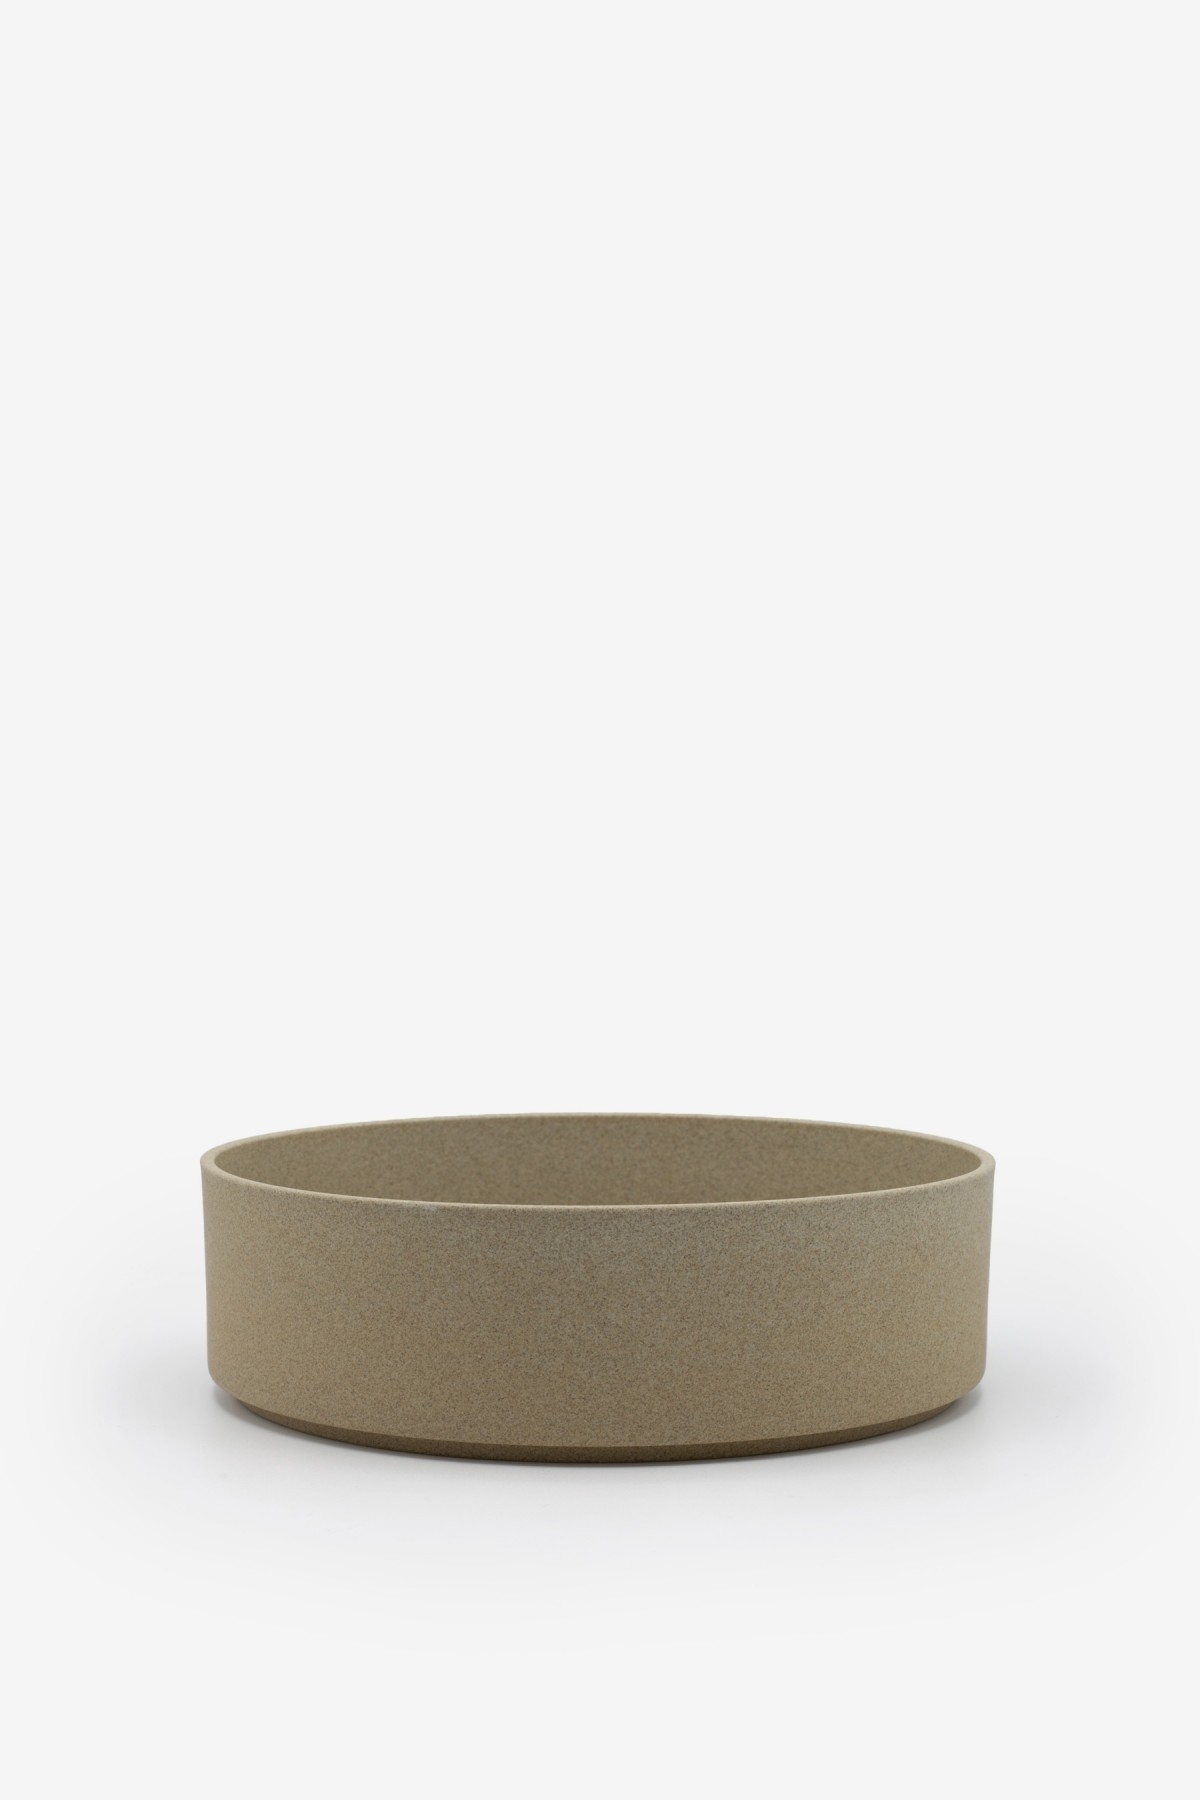 Hasami Porcelain Bowl 185x55 in Sand